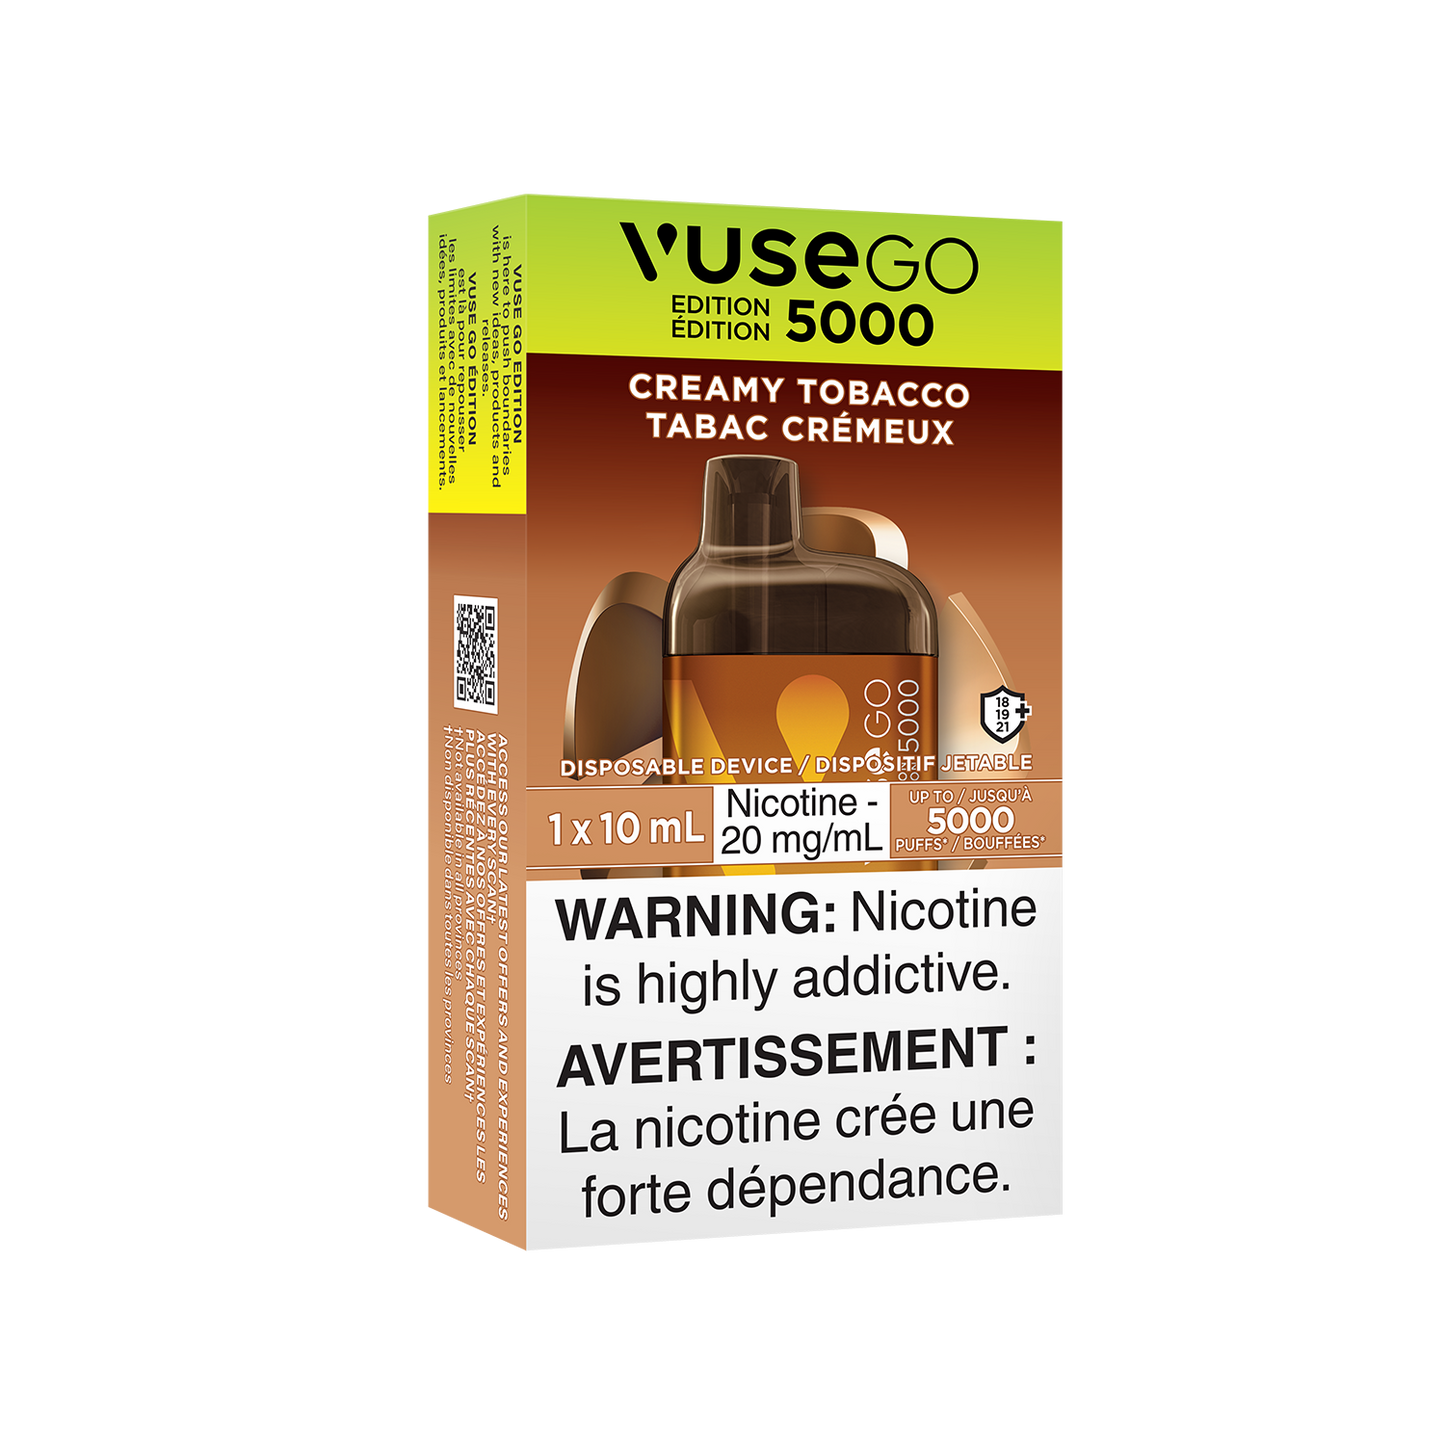 Vuse Go 5000 Edition - Creamy Tobacco, 5000 Puffs